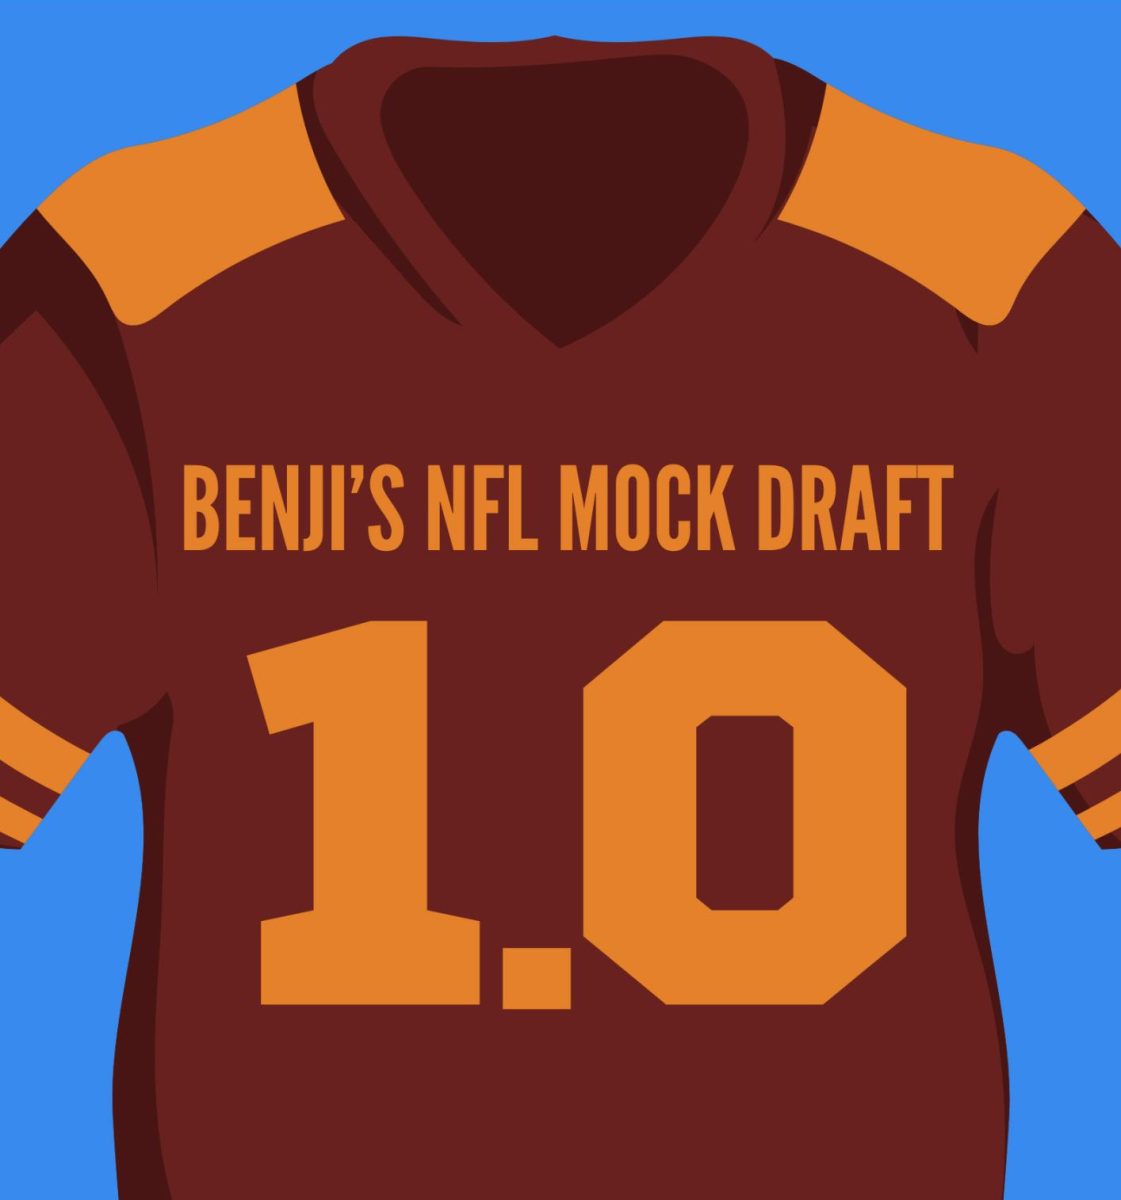 Benjis NFL mock draft. Graphic credit: Carson Gates